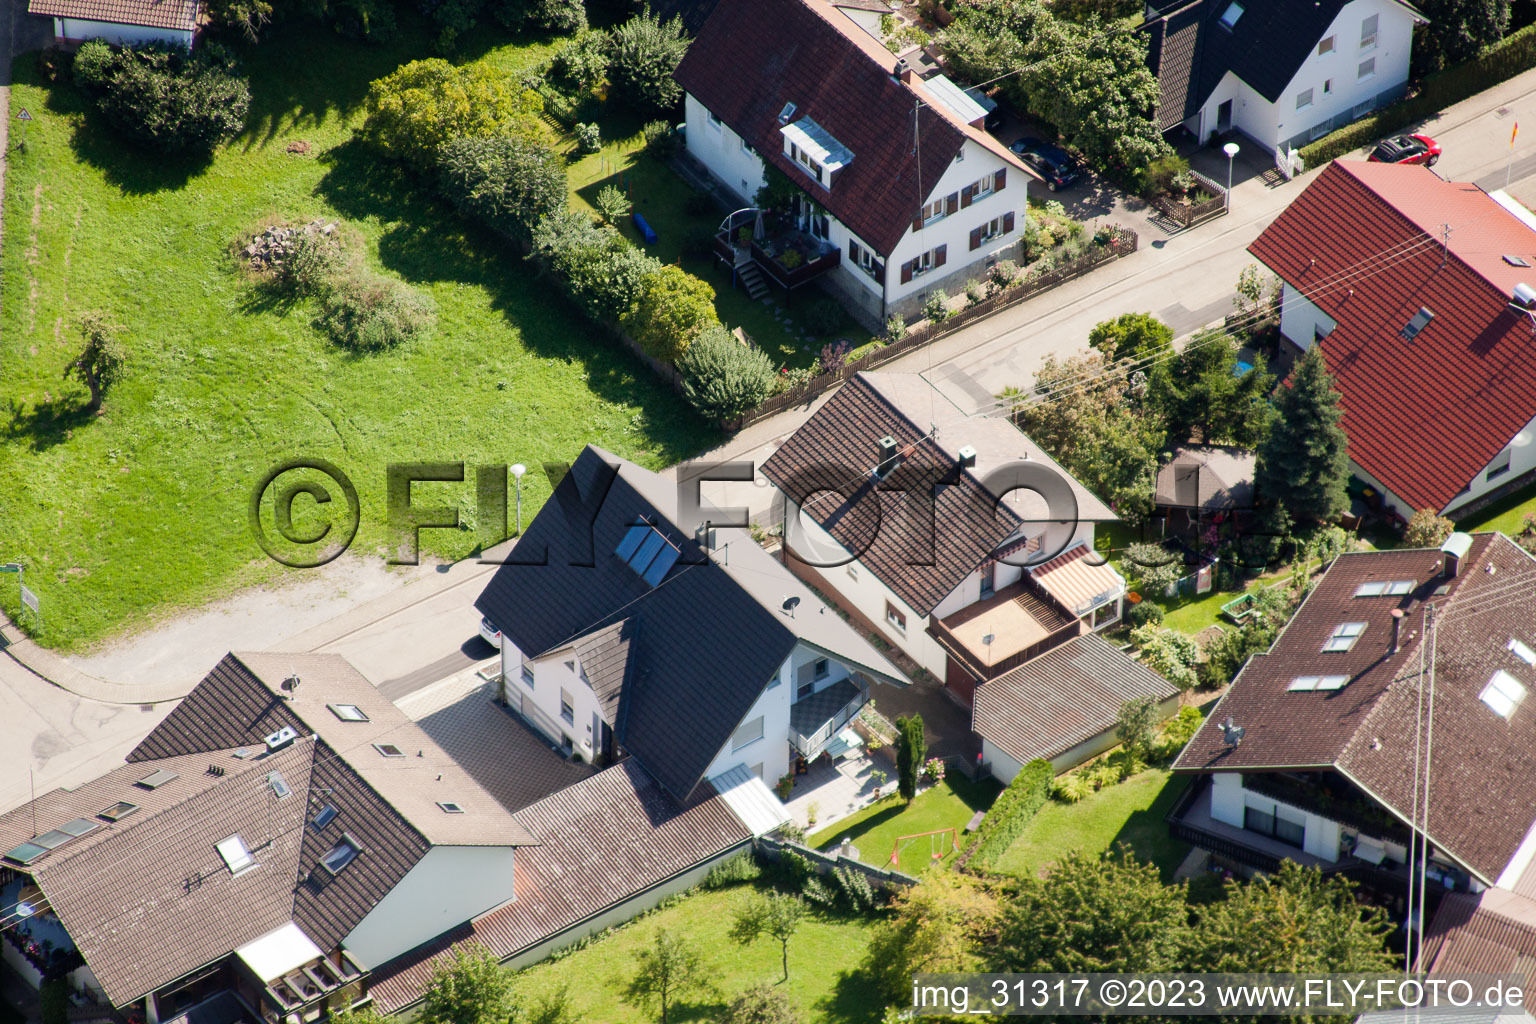 Drone image of Varnhalt, Gartenstr in the district Gallenbach in Baden-Baden in the state Baden-Wuerttemberg, Germany